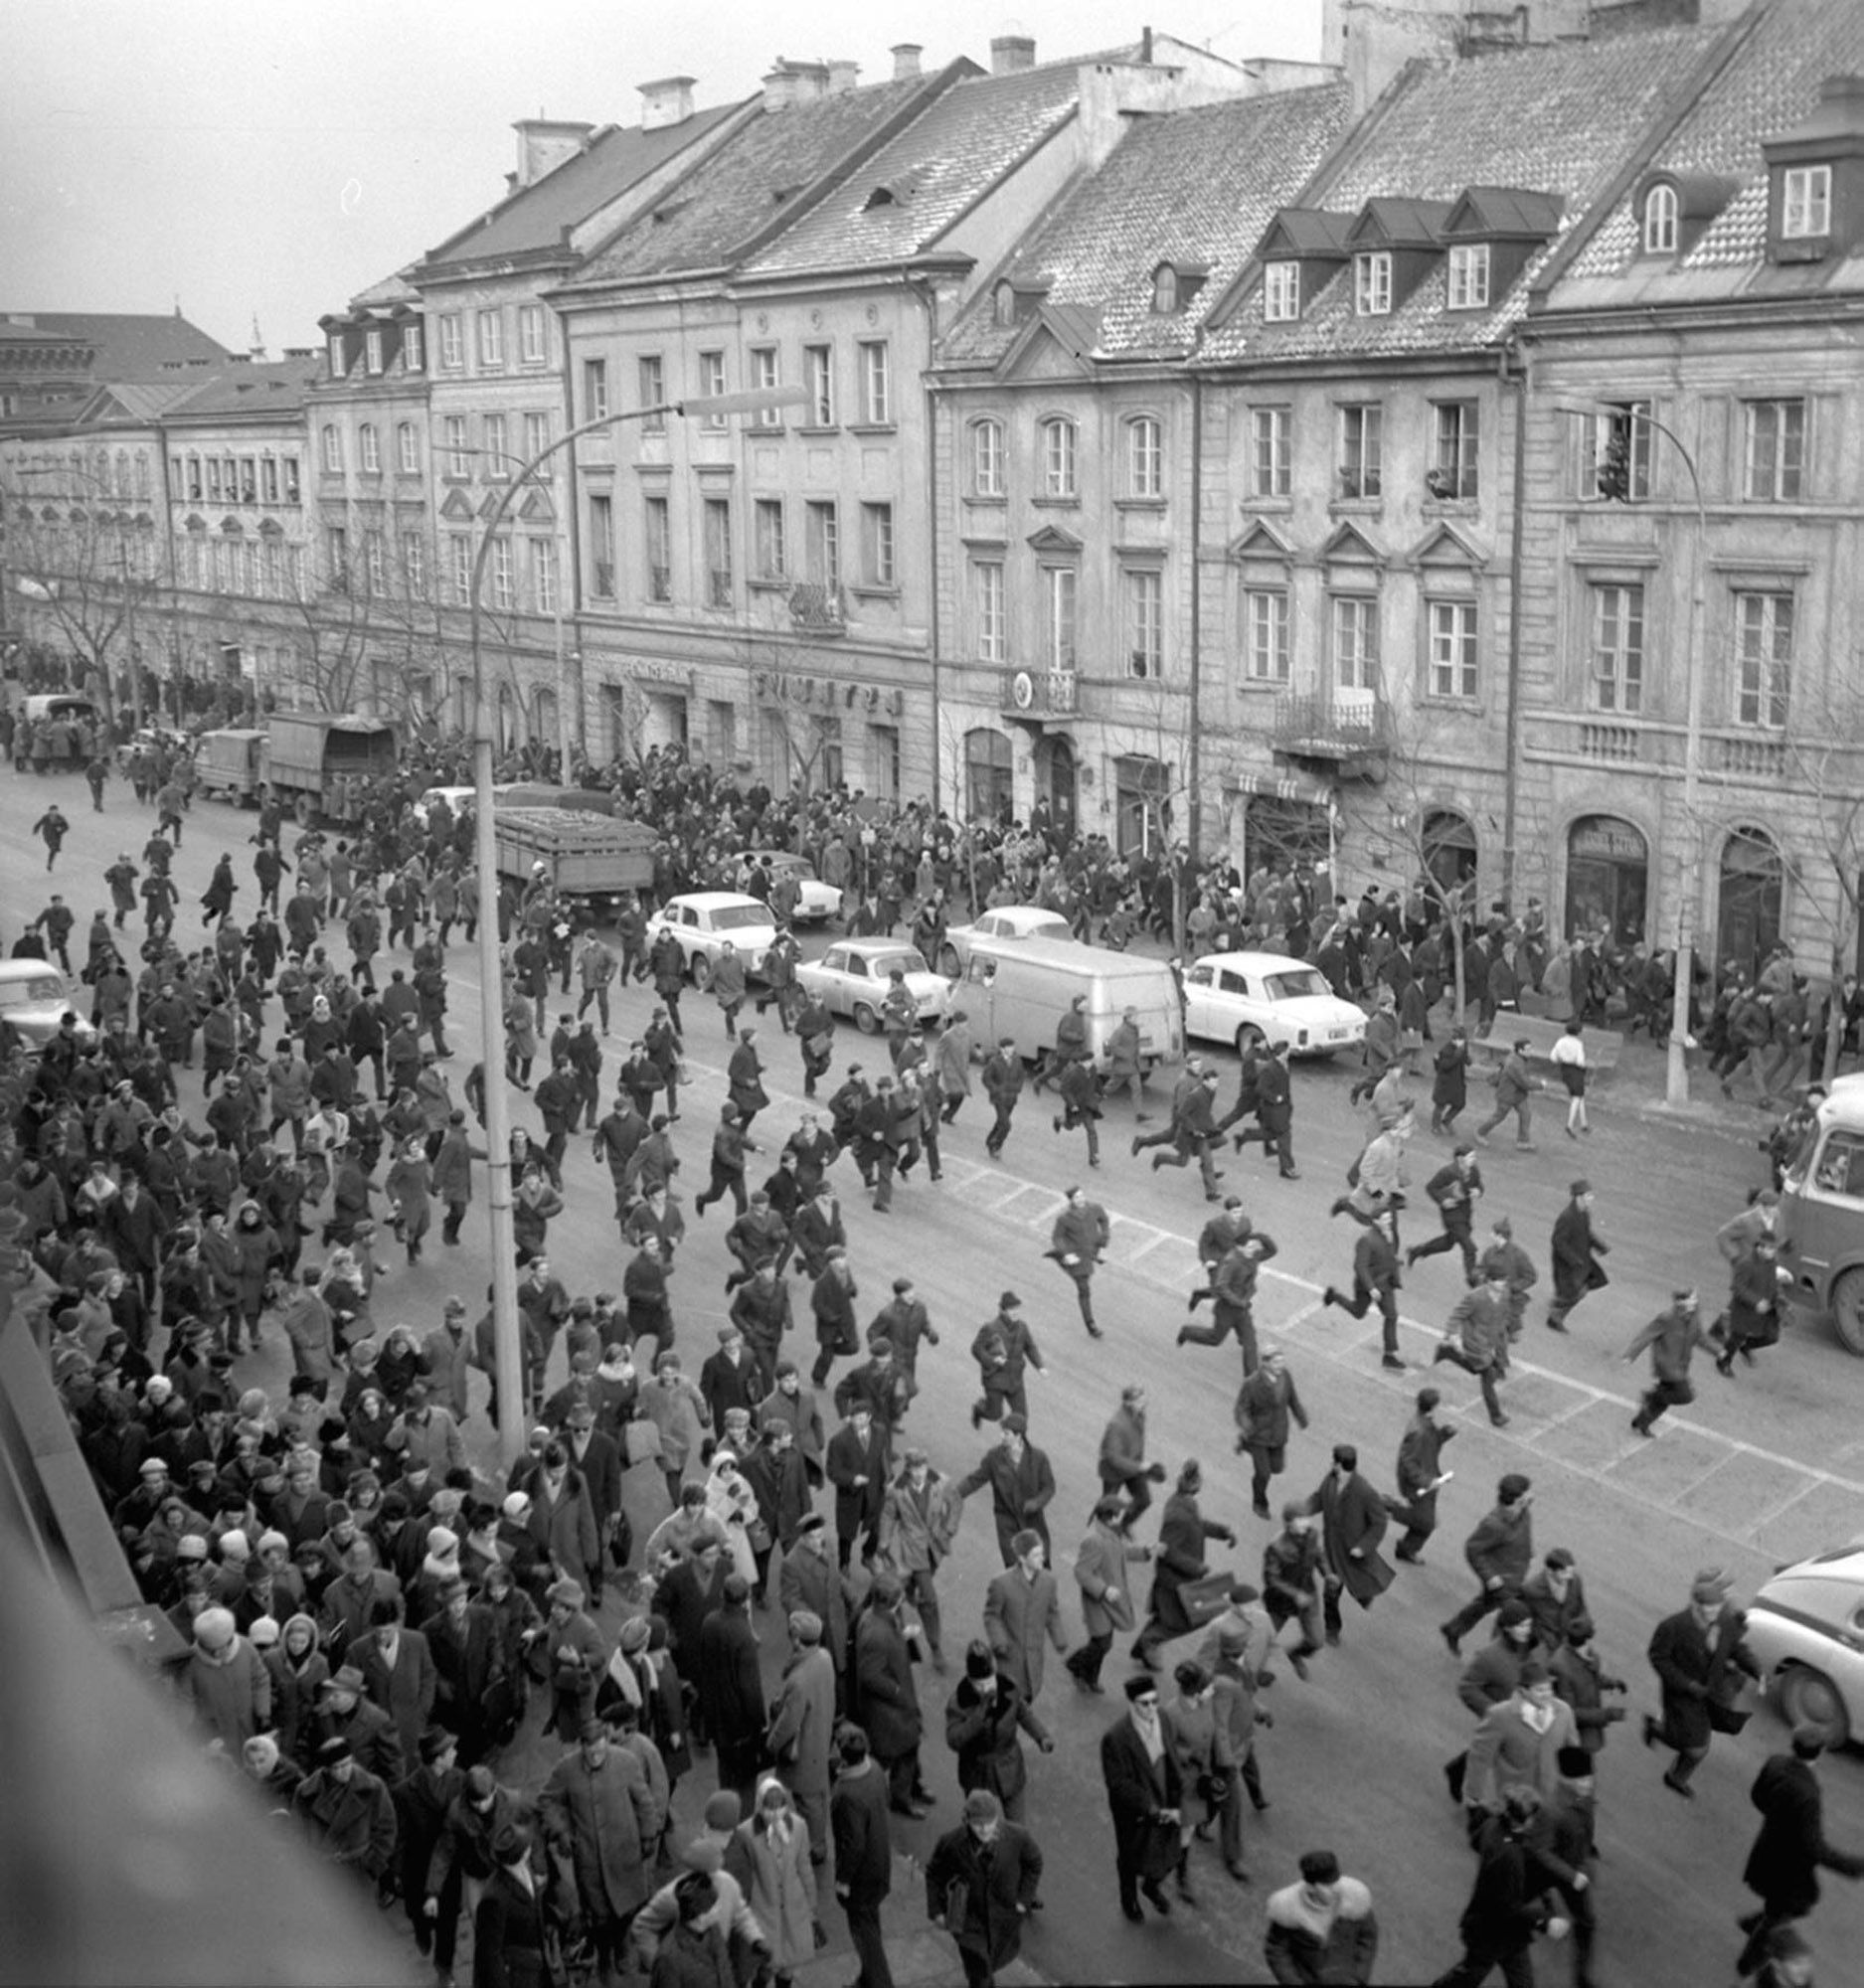 Studenter springer från polisen, mars 1968, Warszawa.